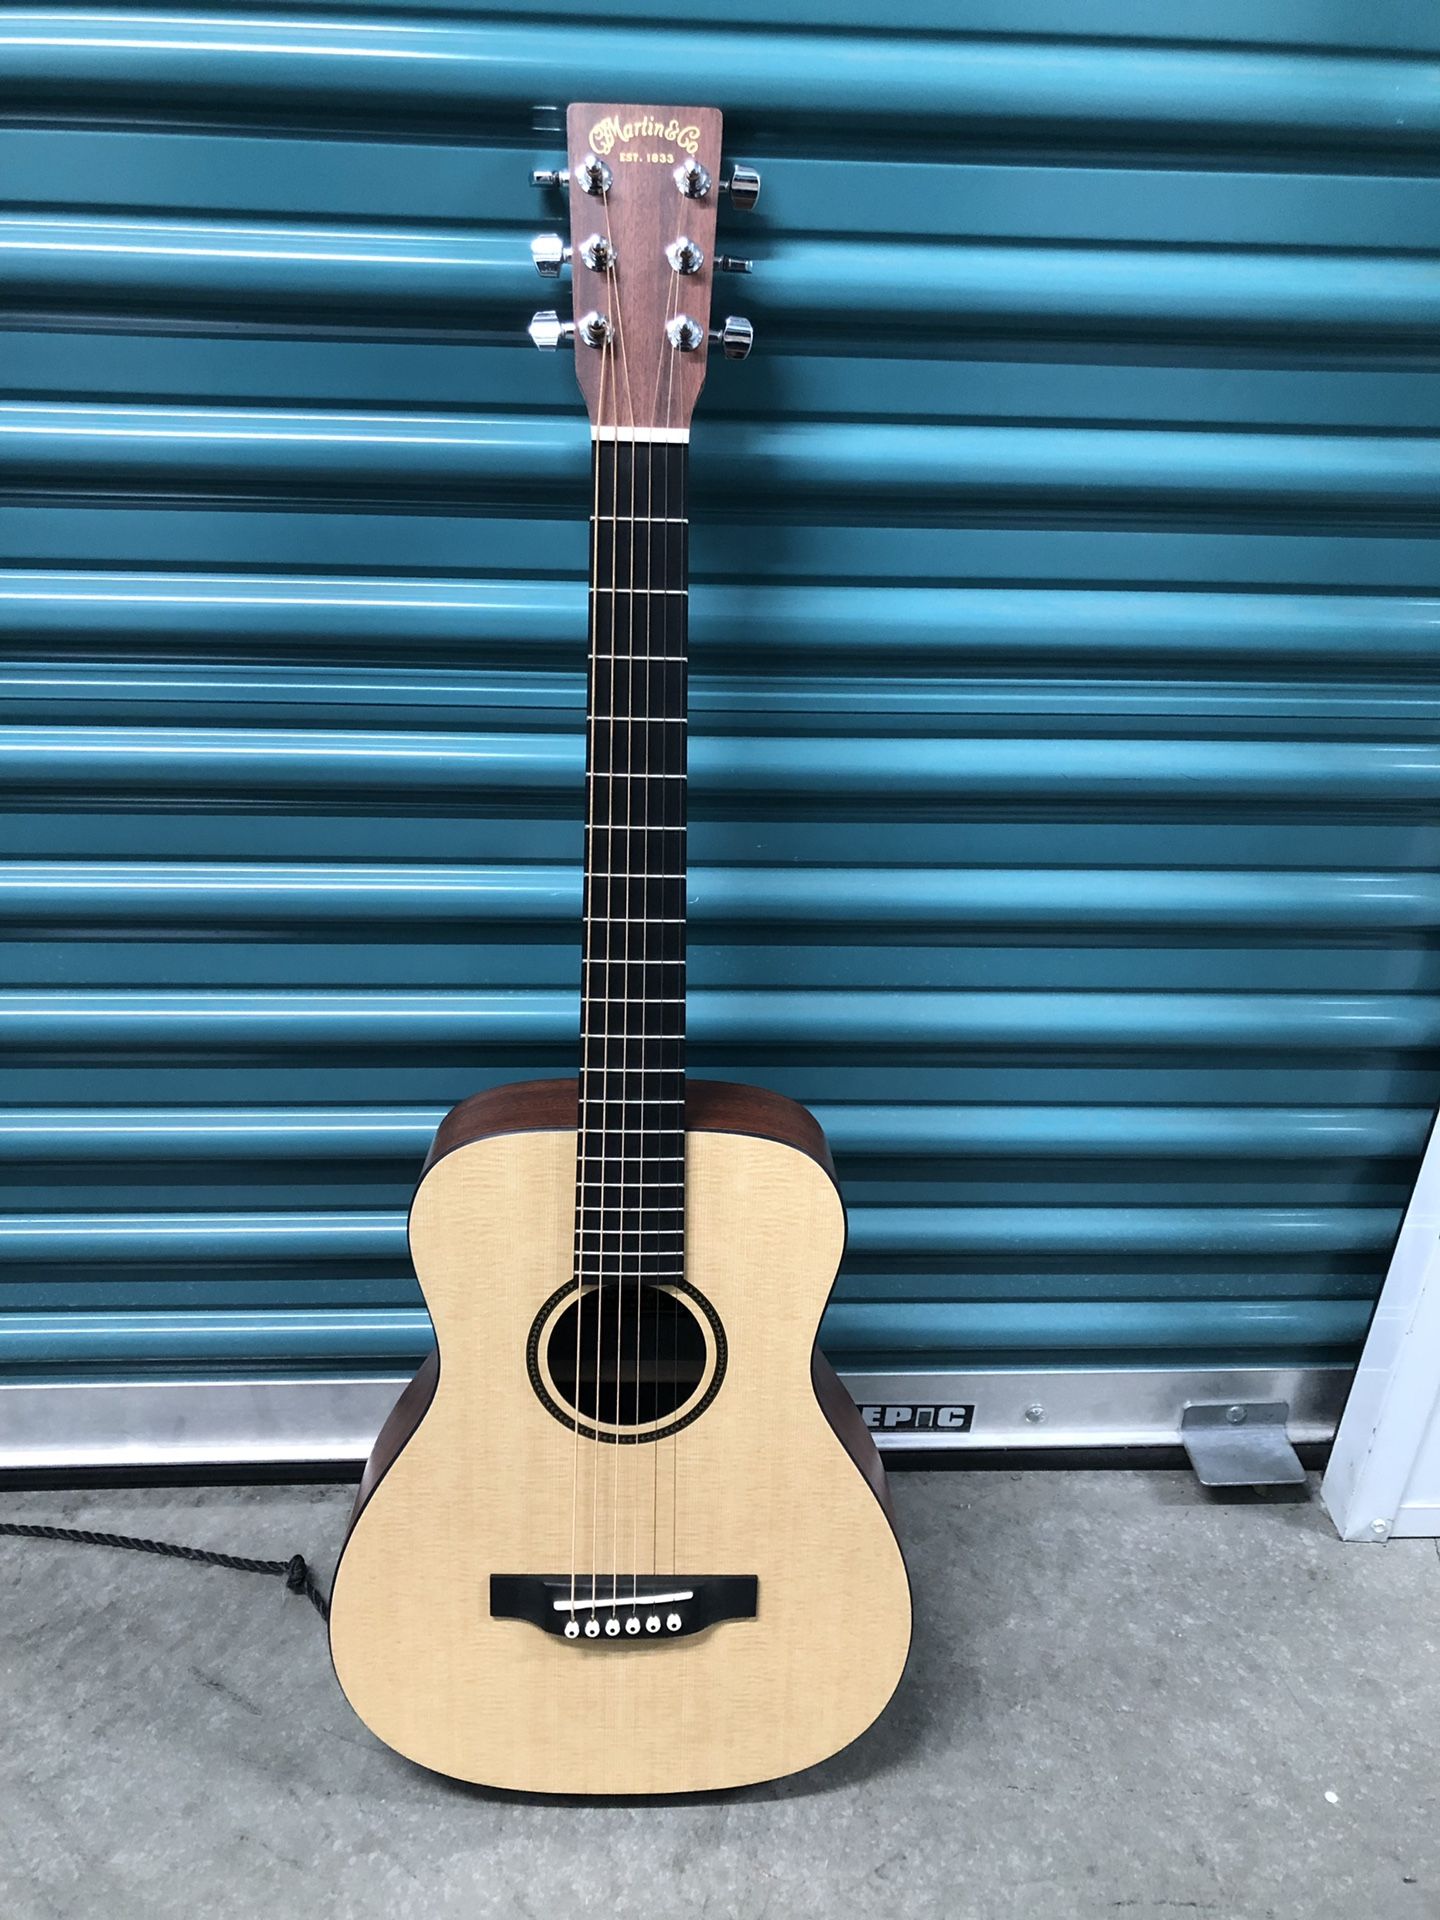 Little Martin acoustic guitar $100